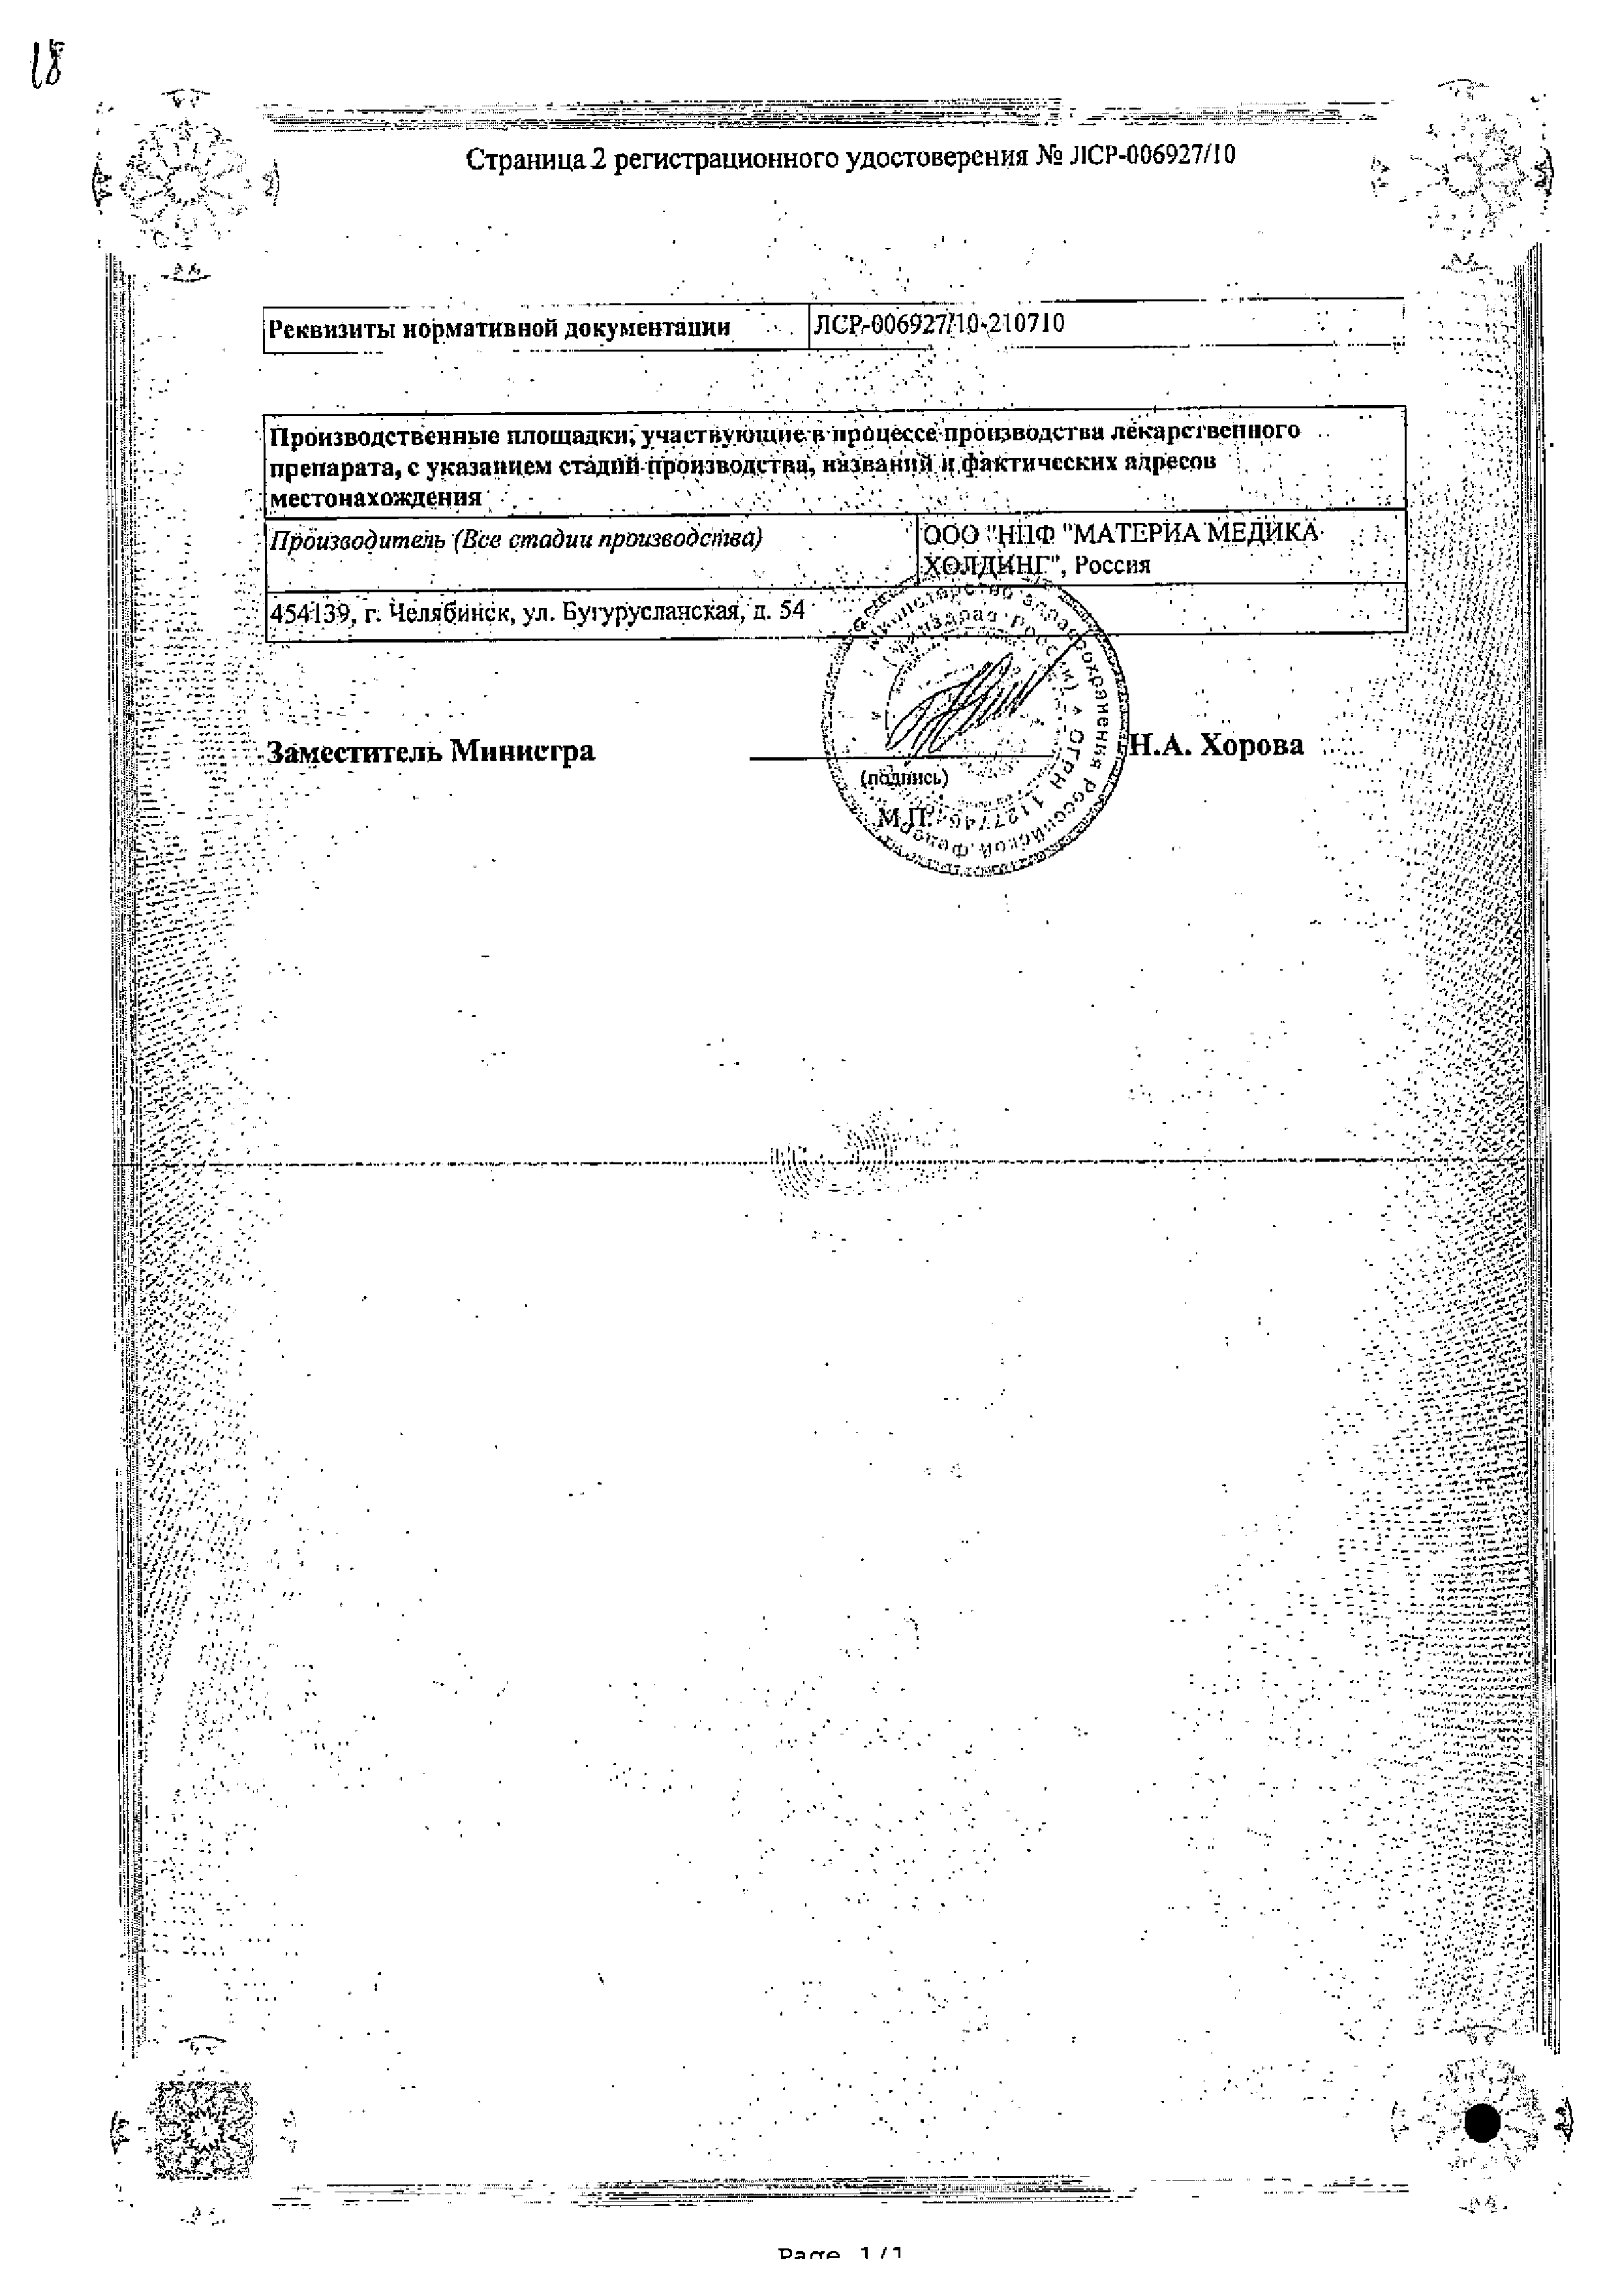 Ренгалин сертификат